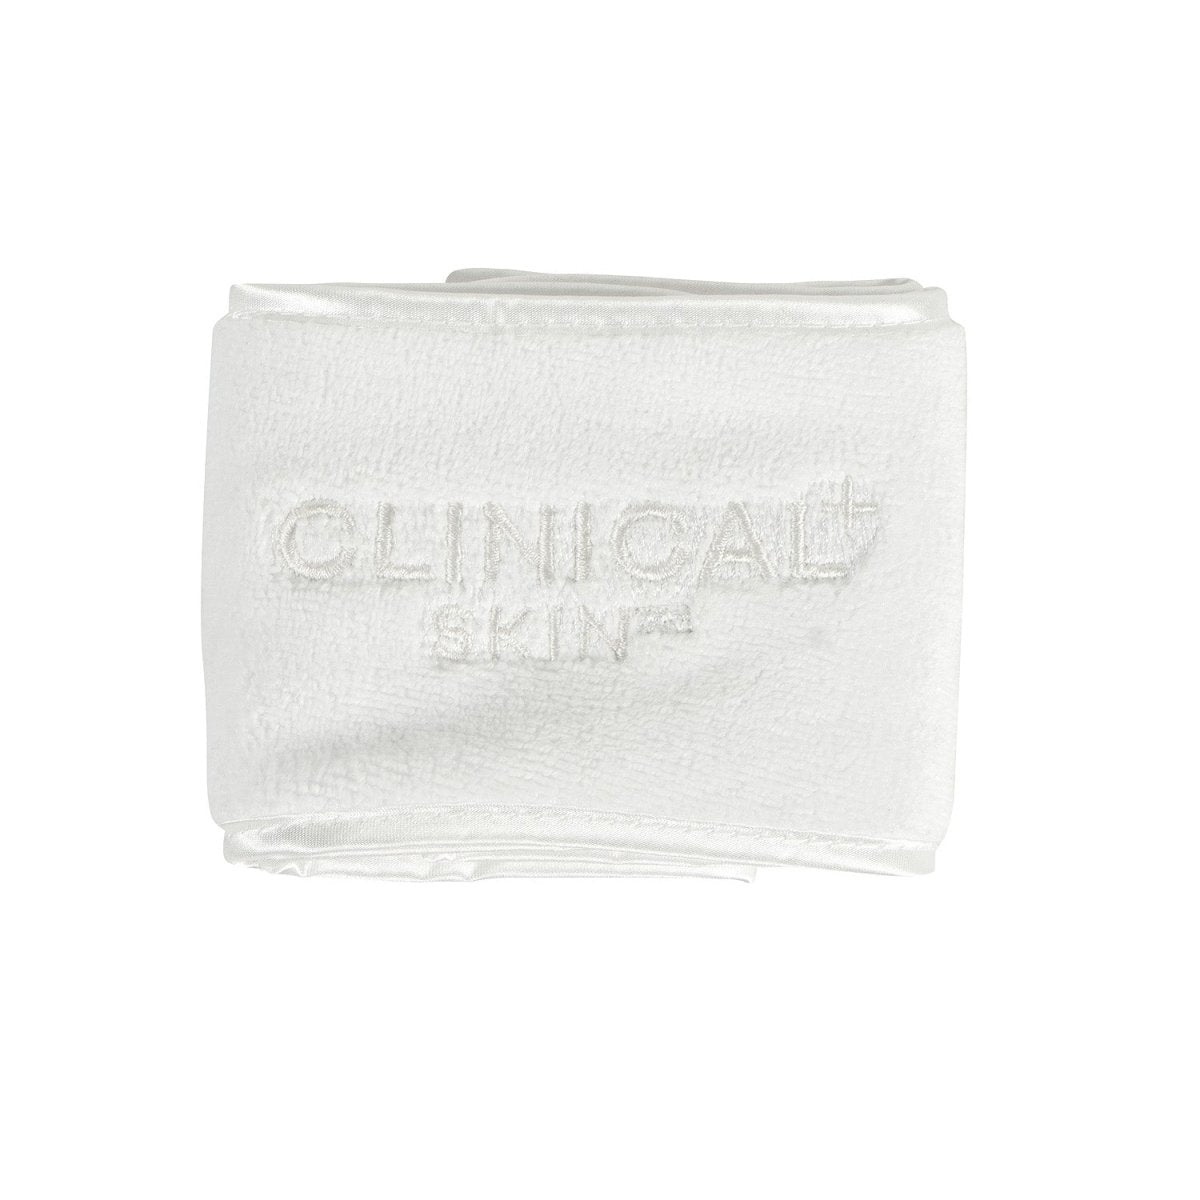 Clinical Skin White Headband - SkincareEssentials